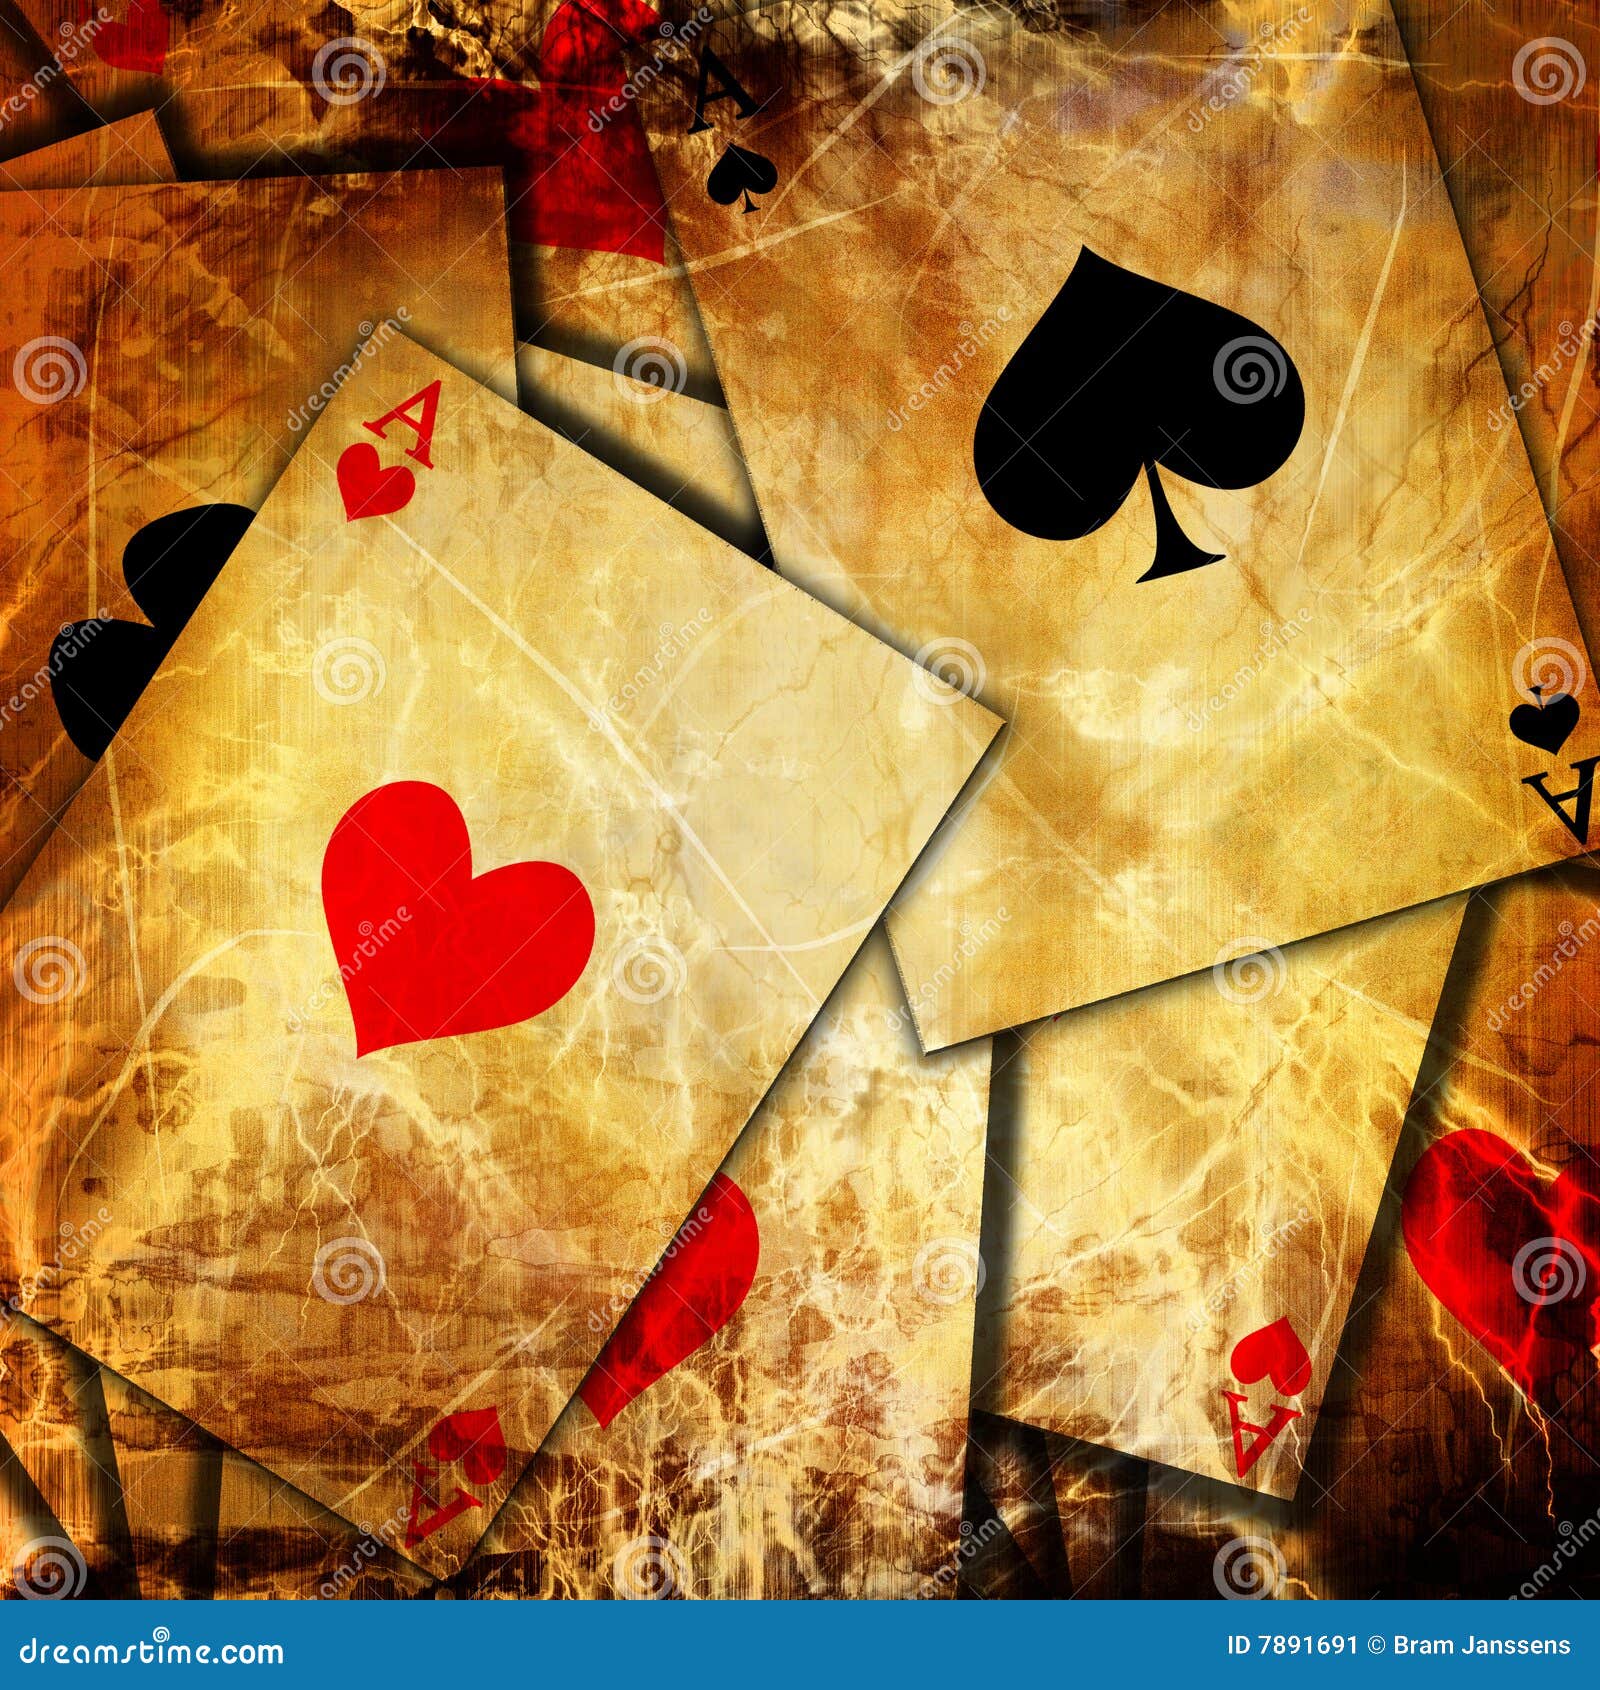 Playing Cards Background Stock Image - Image: 7891691